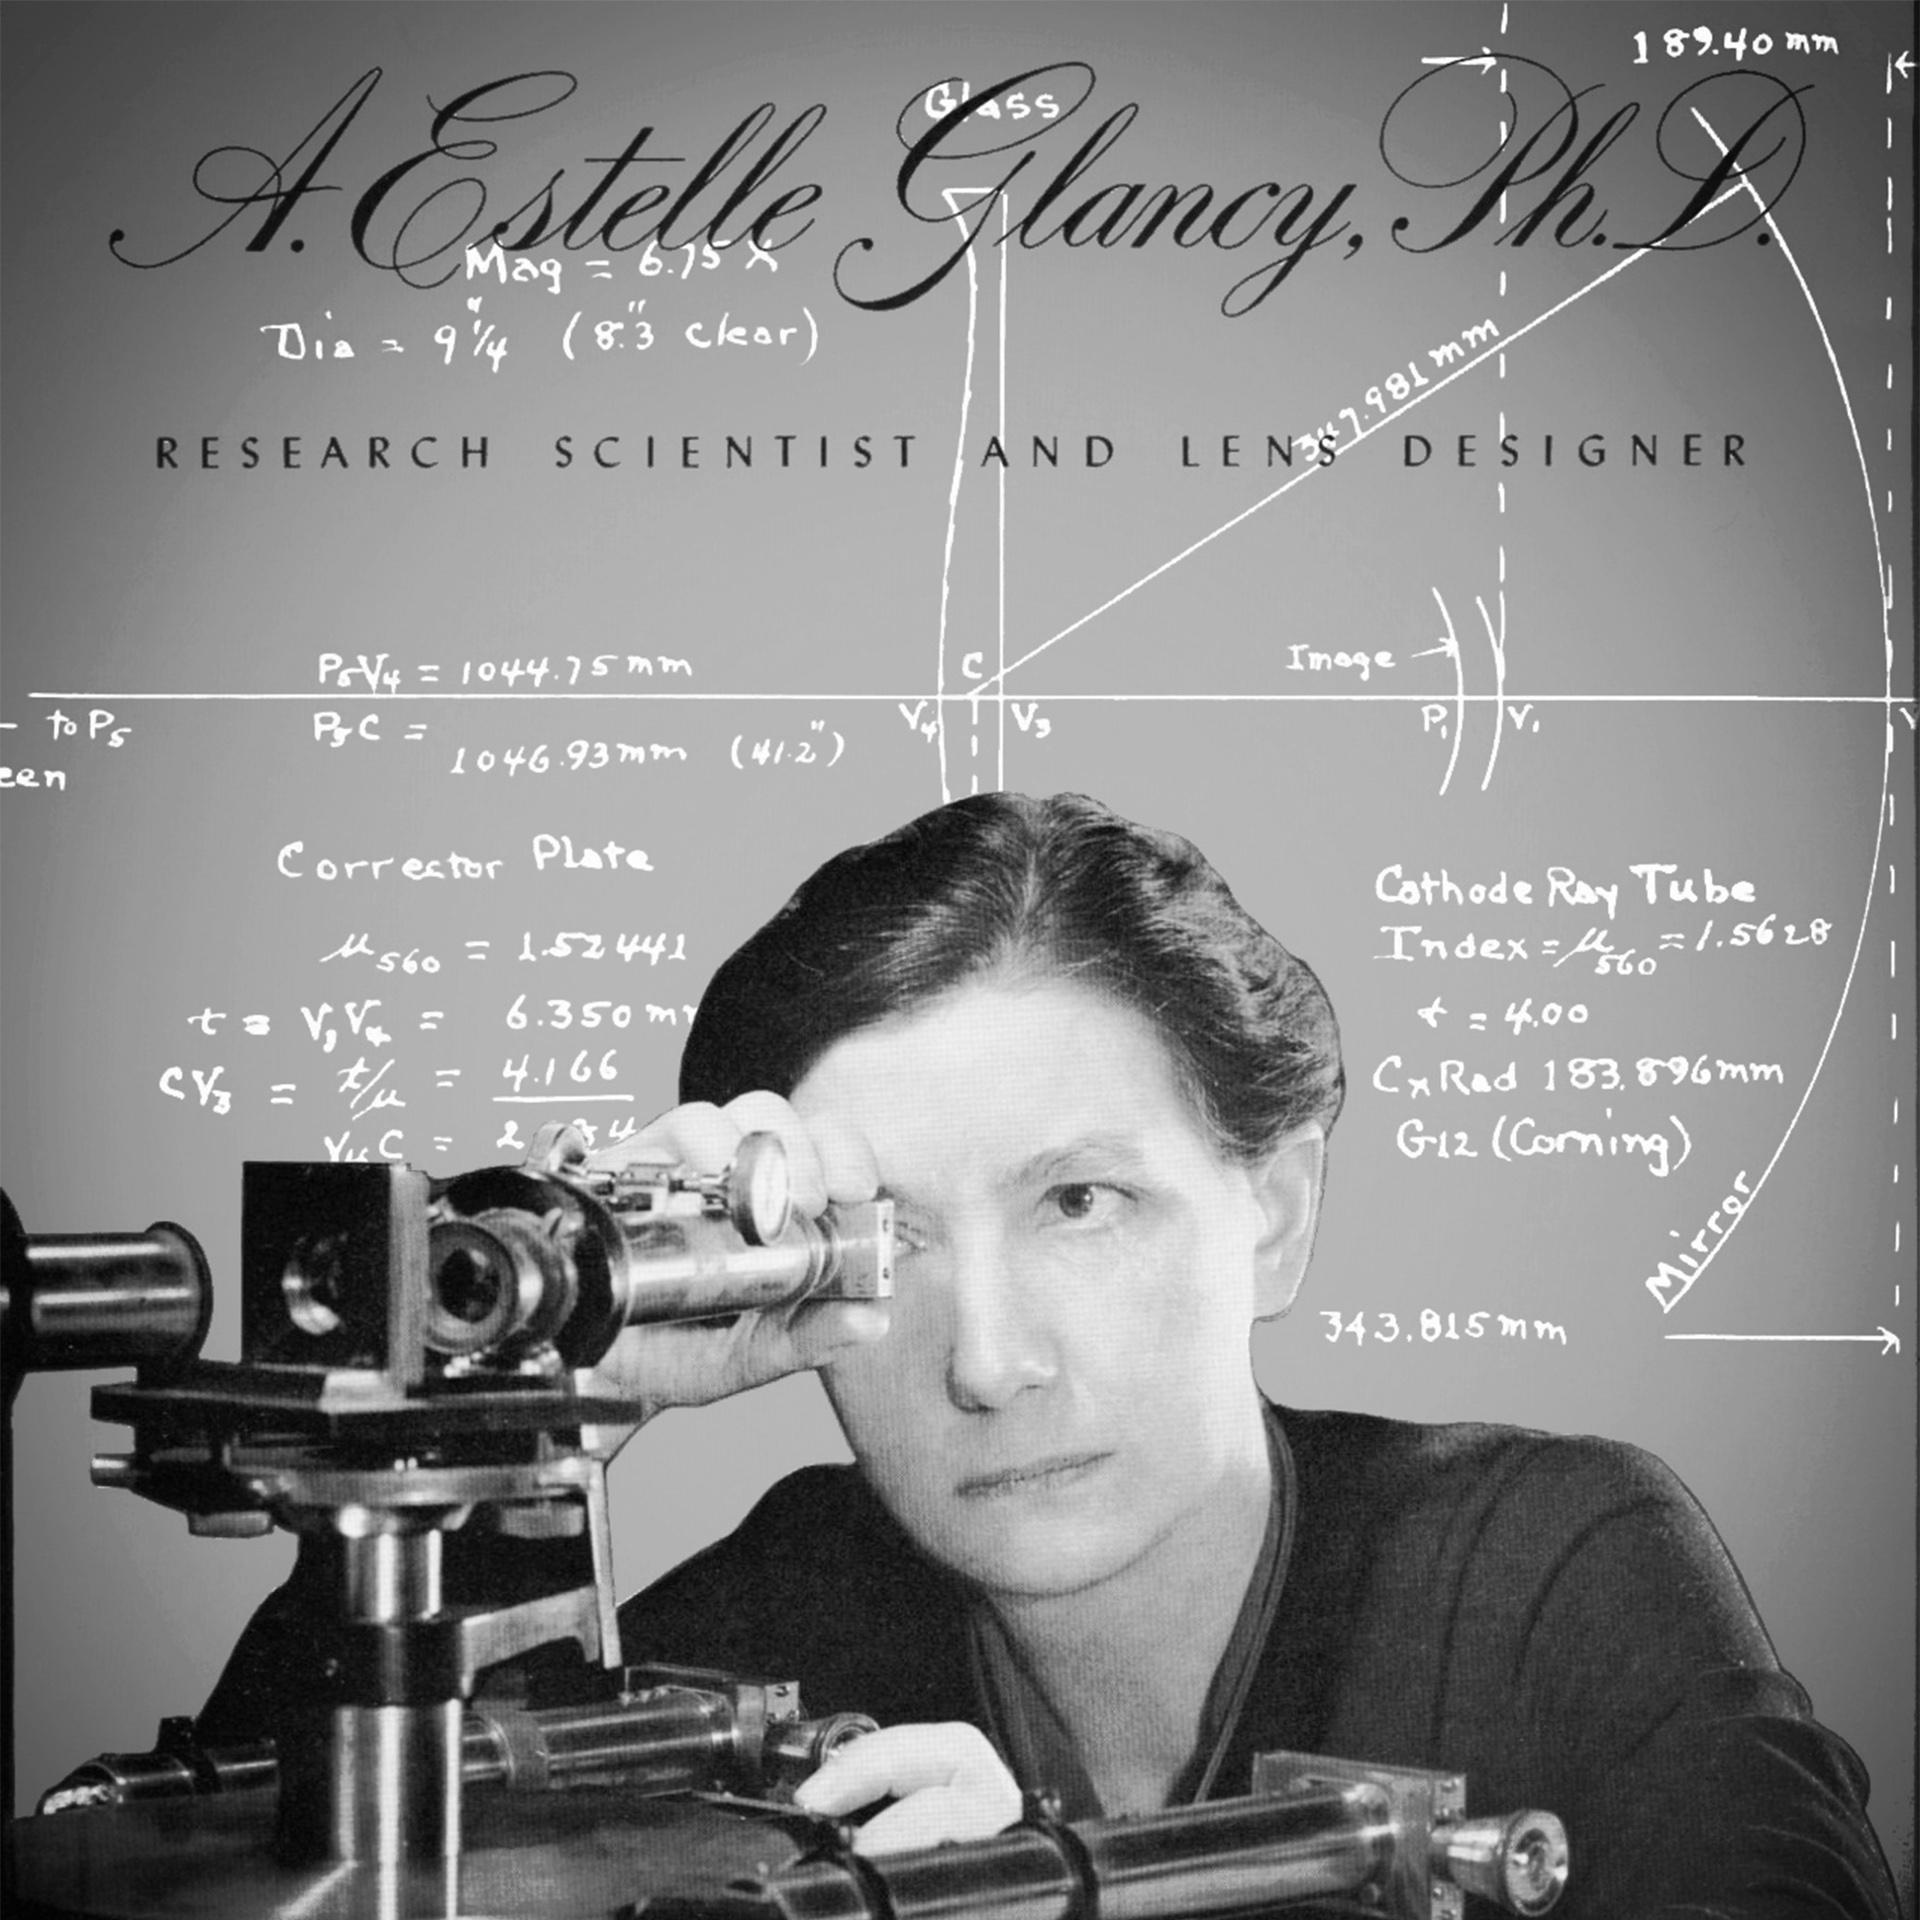 1930s Magazine cover with Estelle Glancy